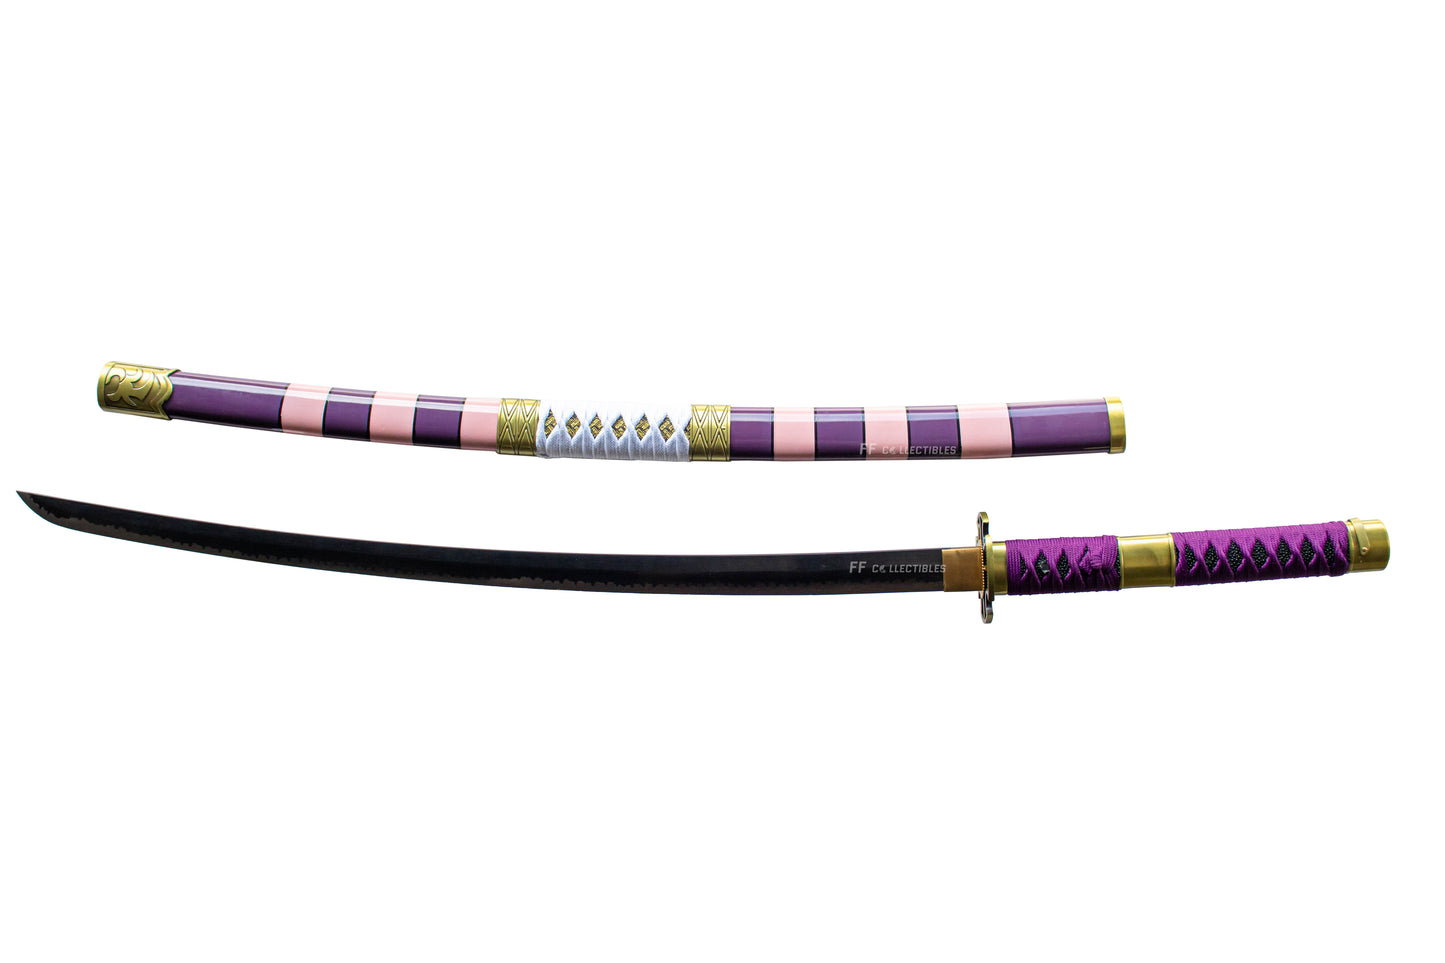 ONE PIECE – NIDAI KITETSU, THE SWORD OF TENGUYAMA HITETSU (w FREE sword stand)